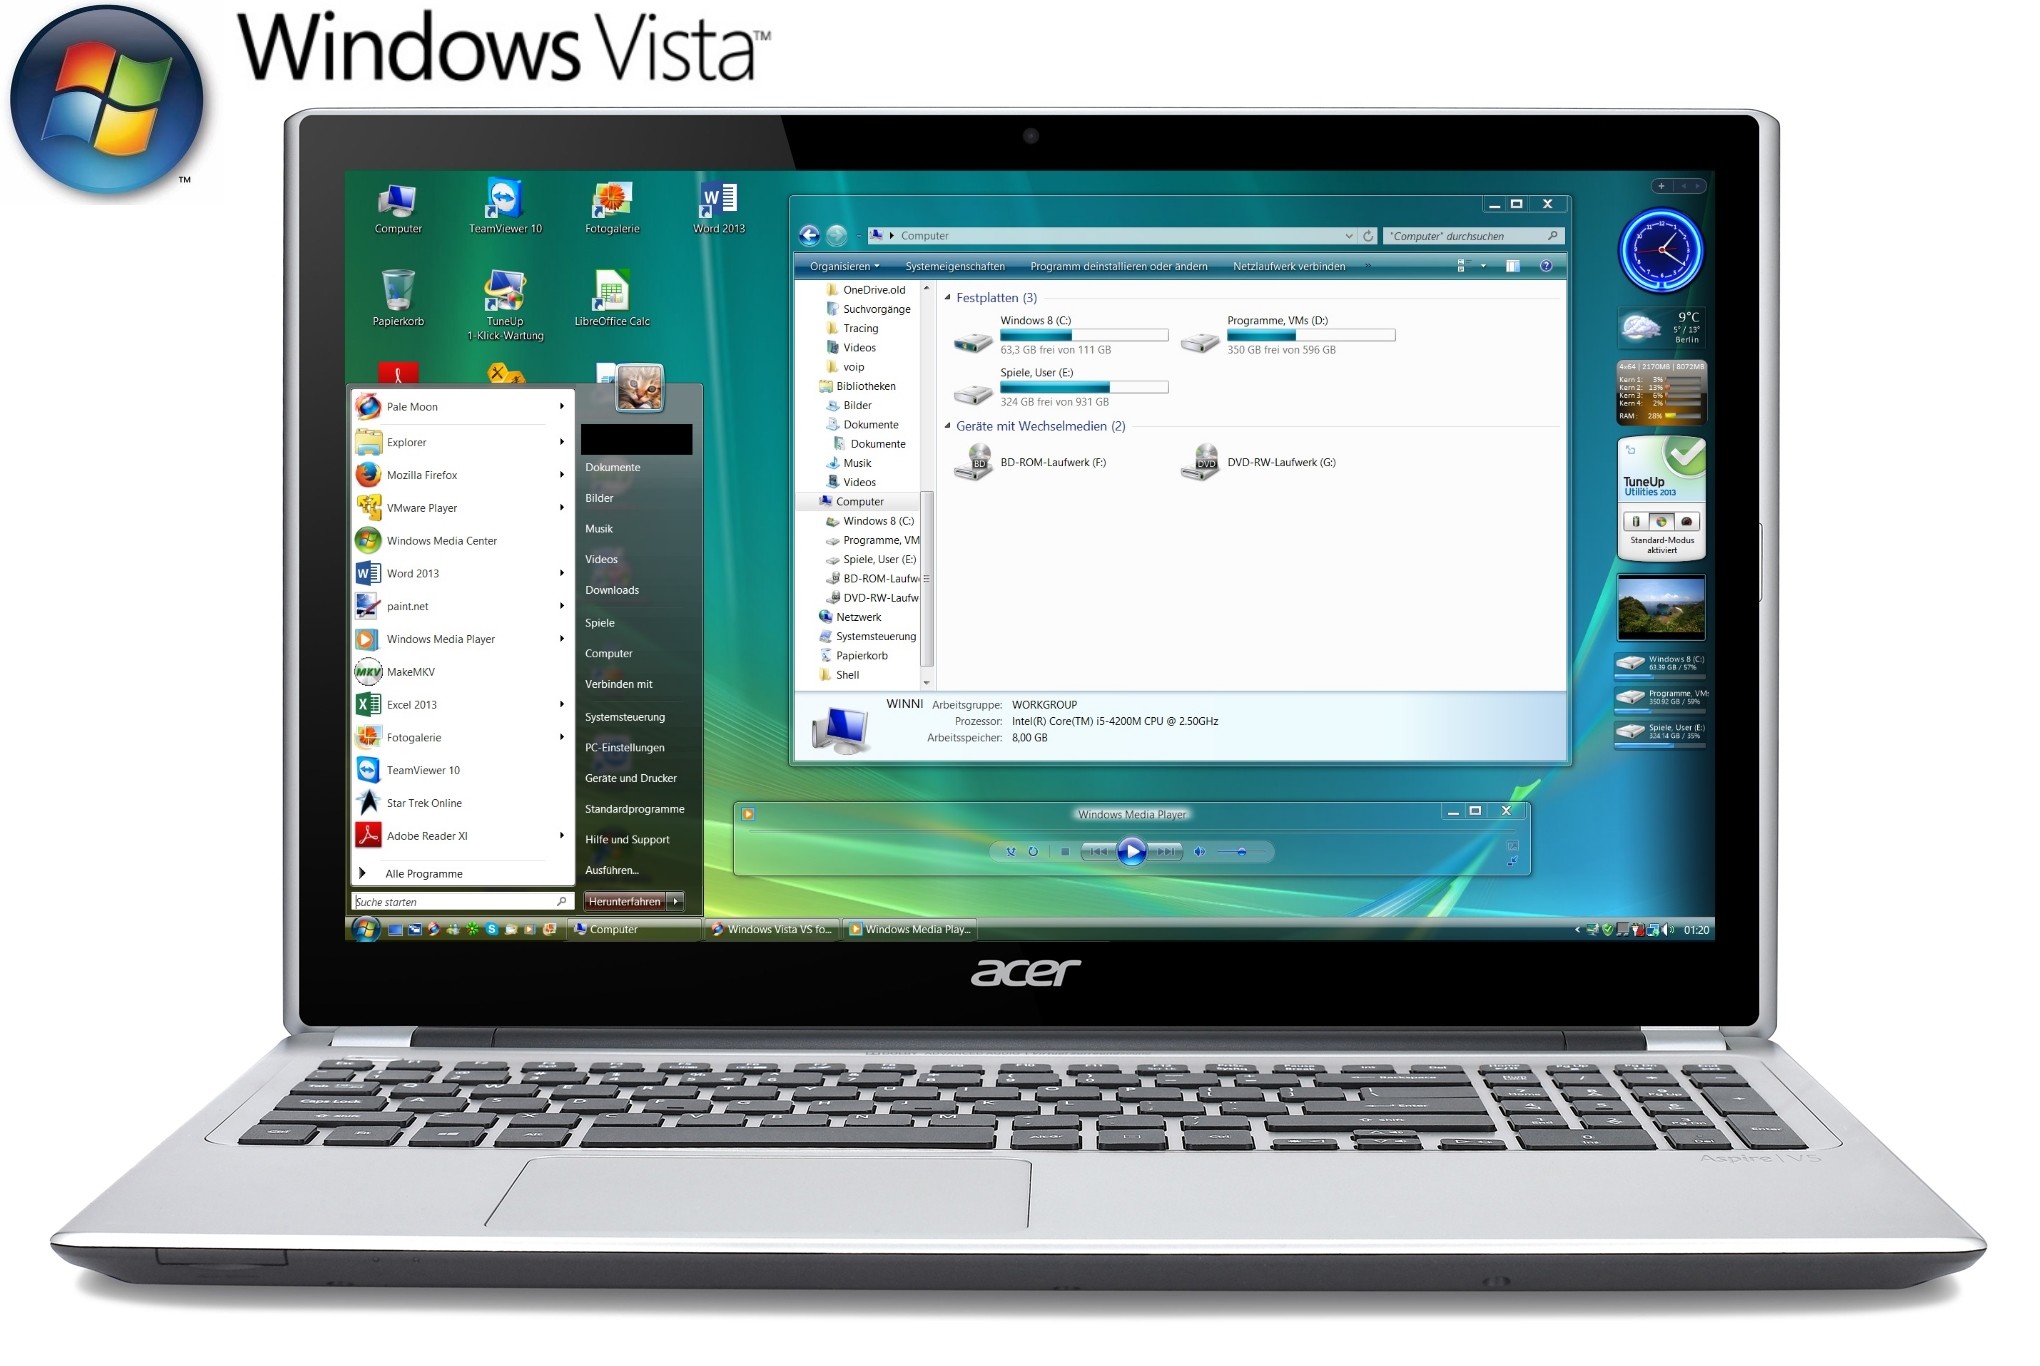 2040x1366 ... Windows Vista VS for Windows 8.1 Update 1 by XReunion160